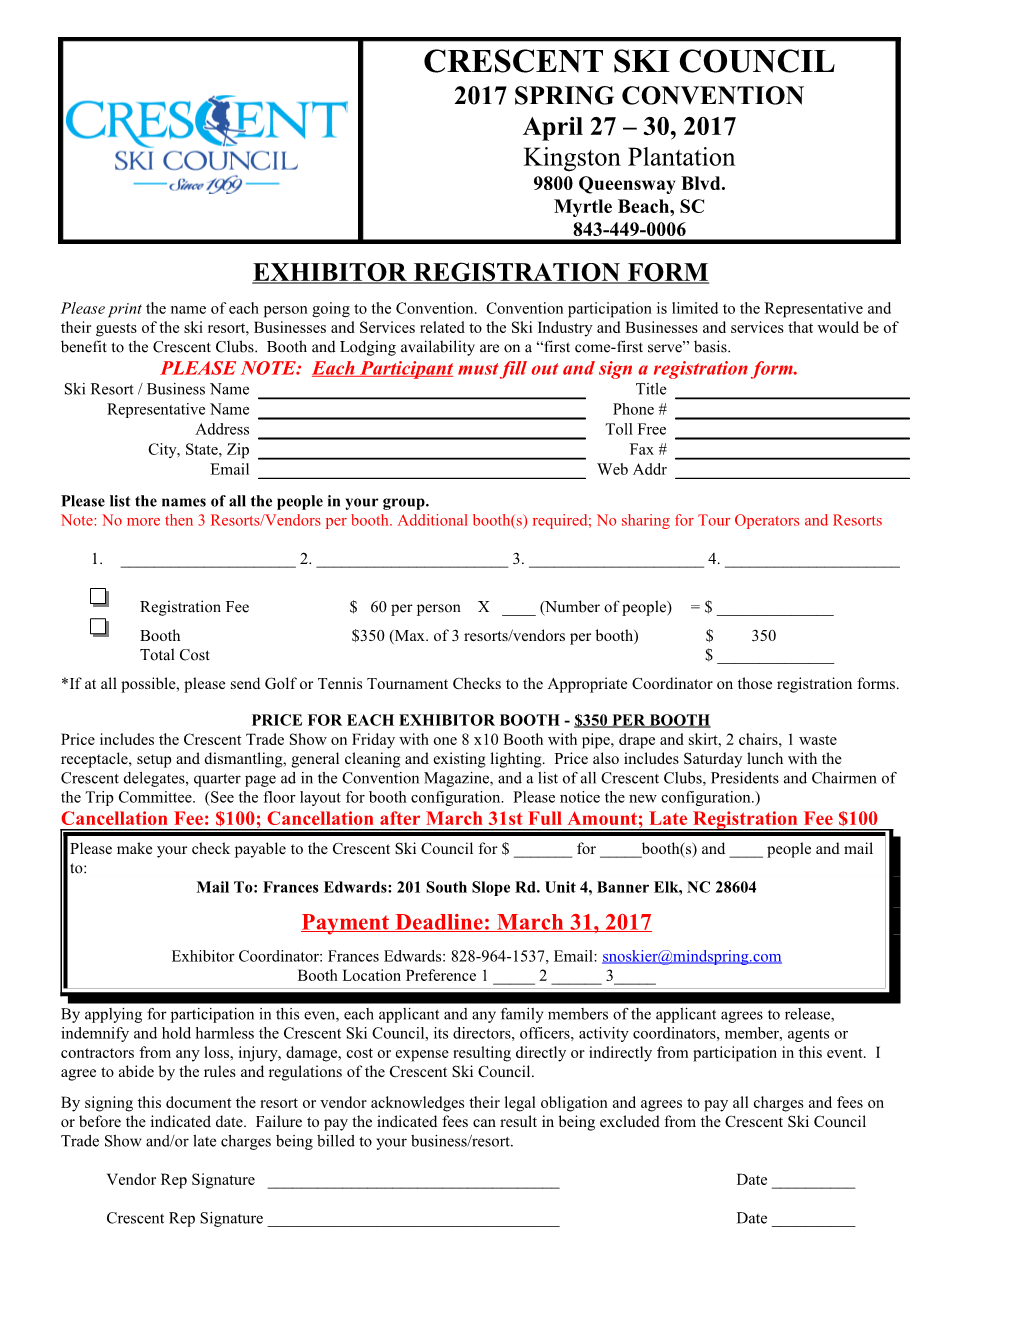 Exhibitor Registration Form s1